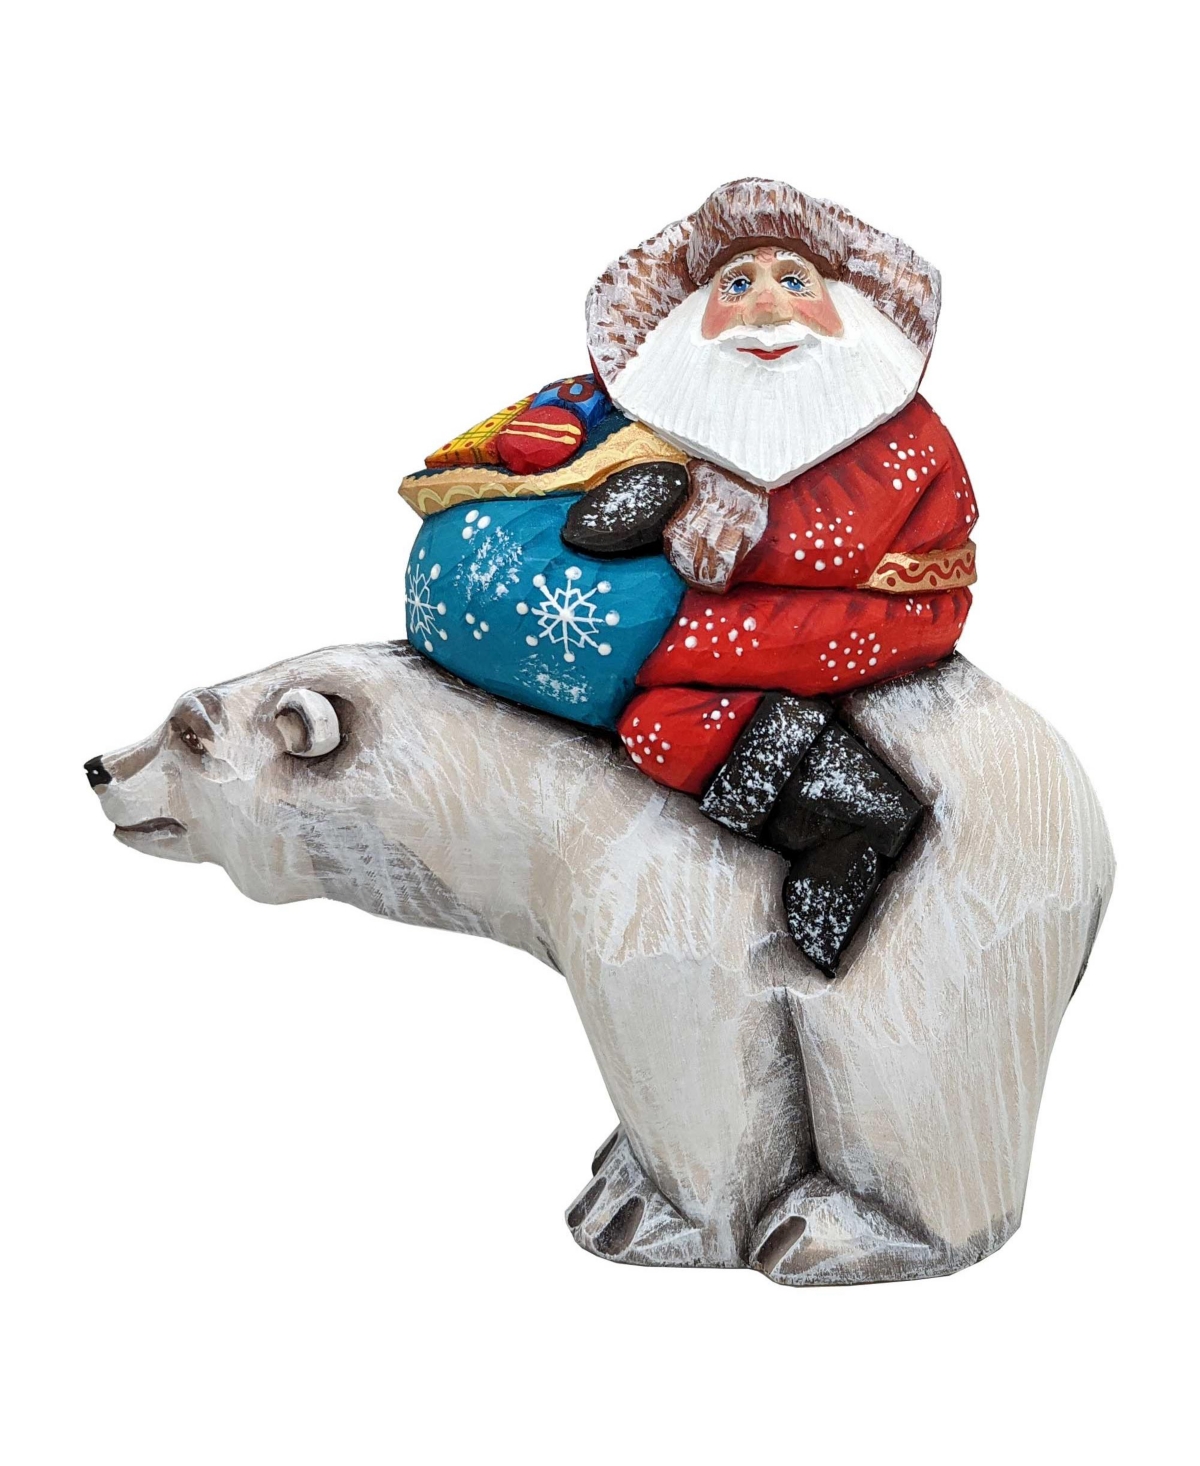 Gifty Traveler Polar Bear Santa Carved Figurine - Multi Color